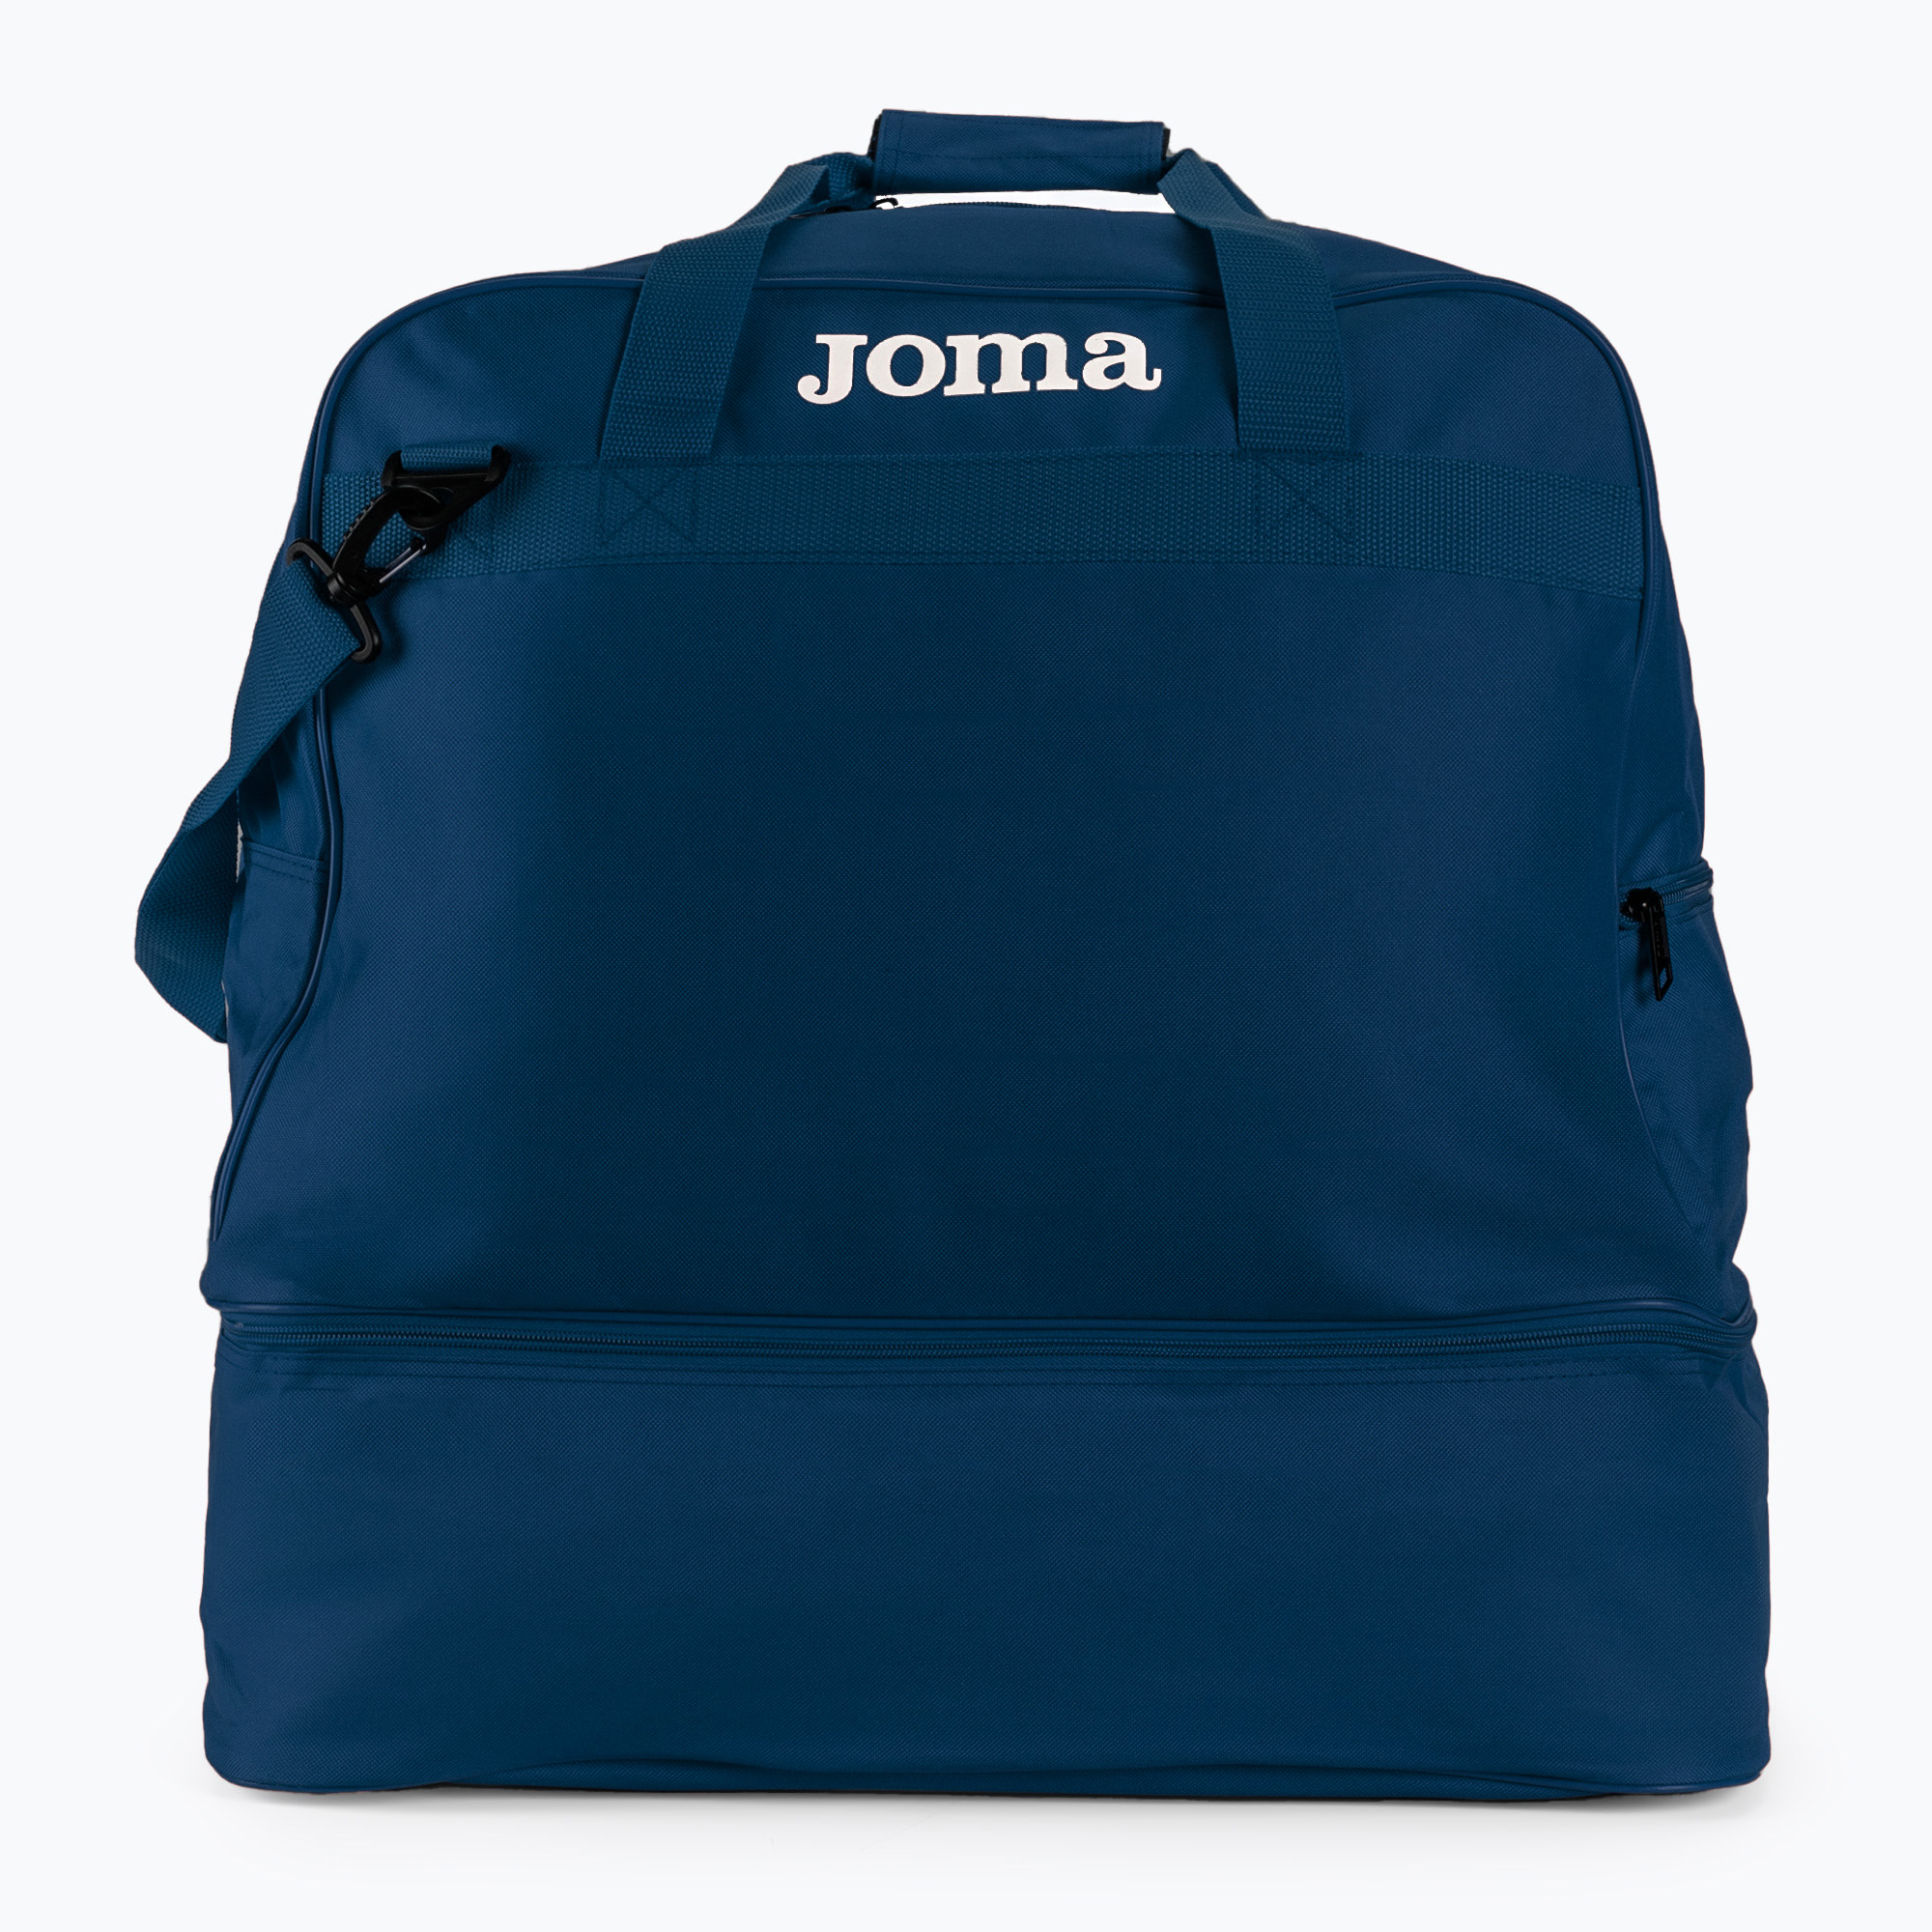 Joma Training III sac de fotbal albastru marin 400008.300